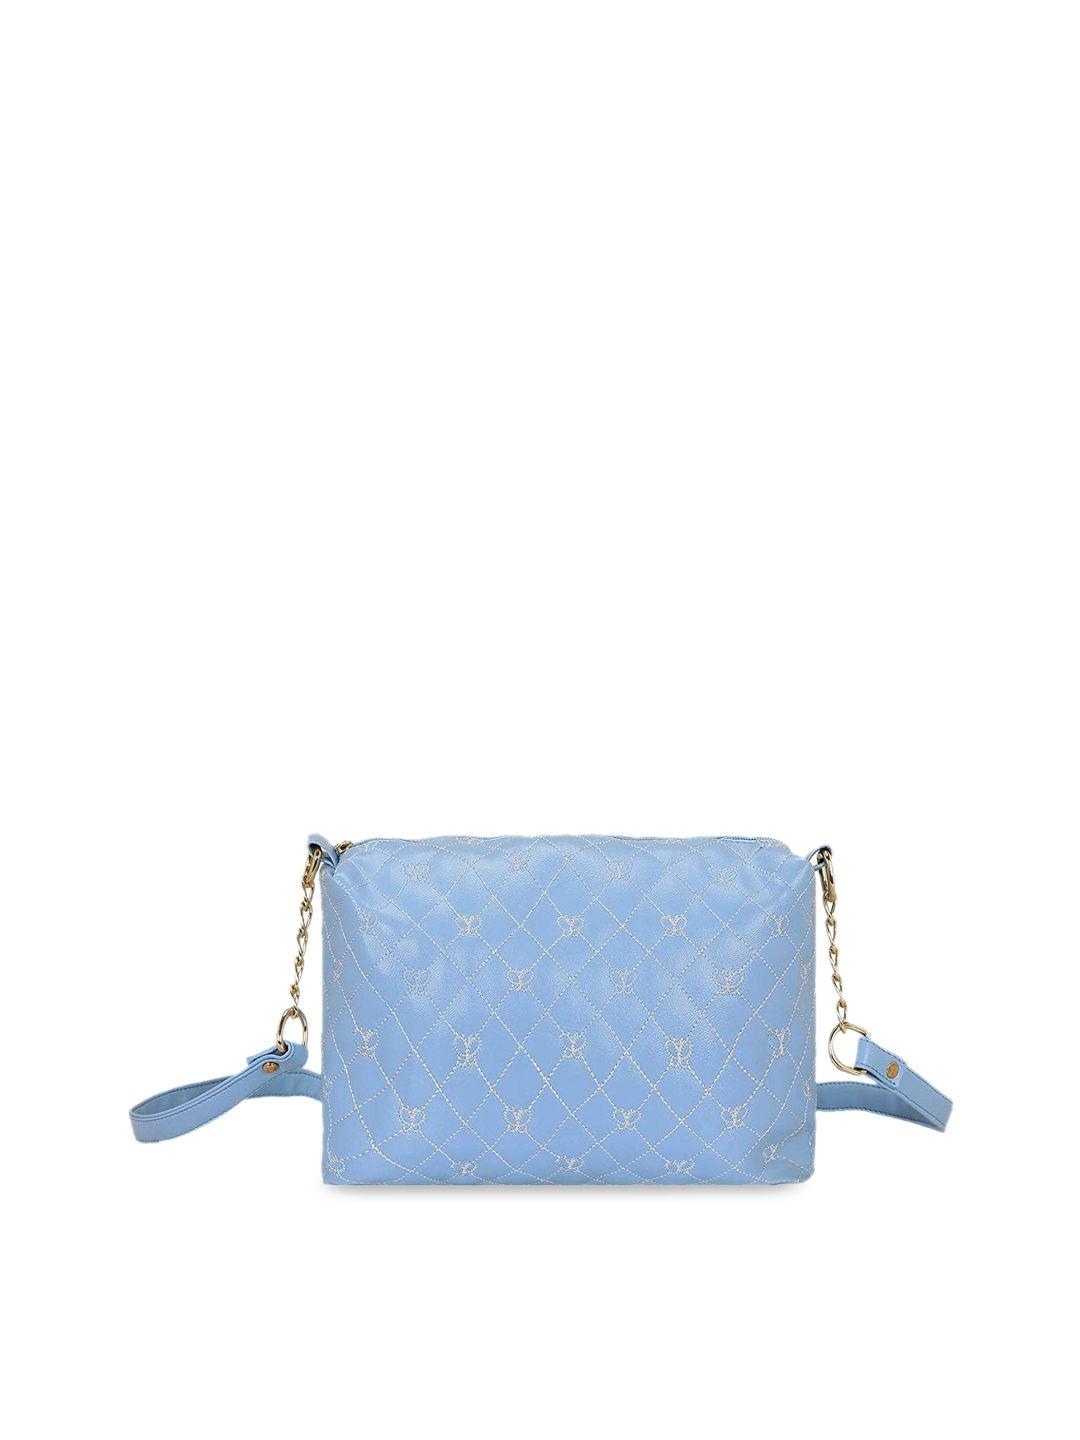 kleio women blue textured sling bag